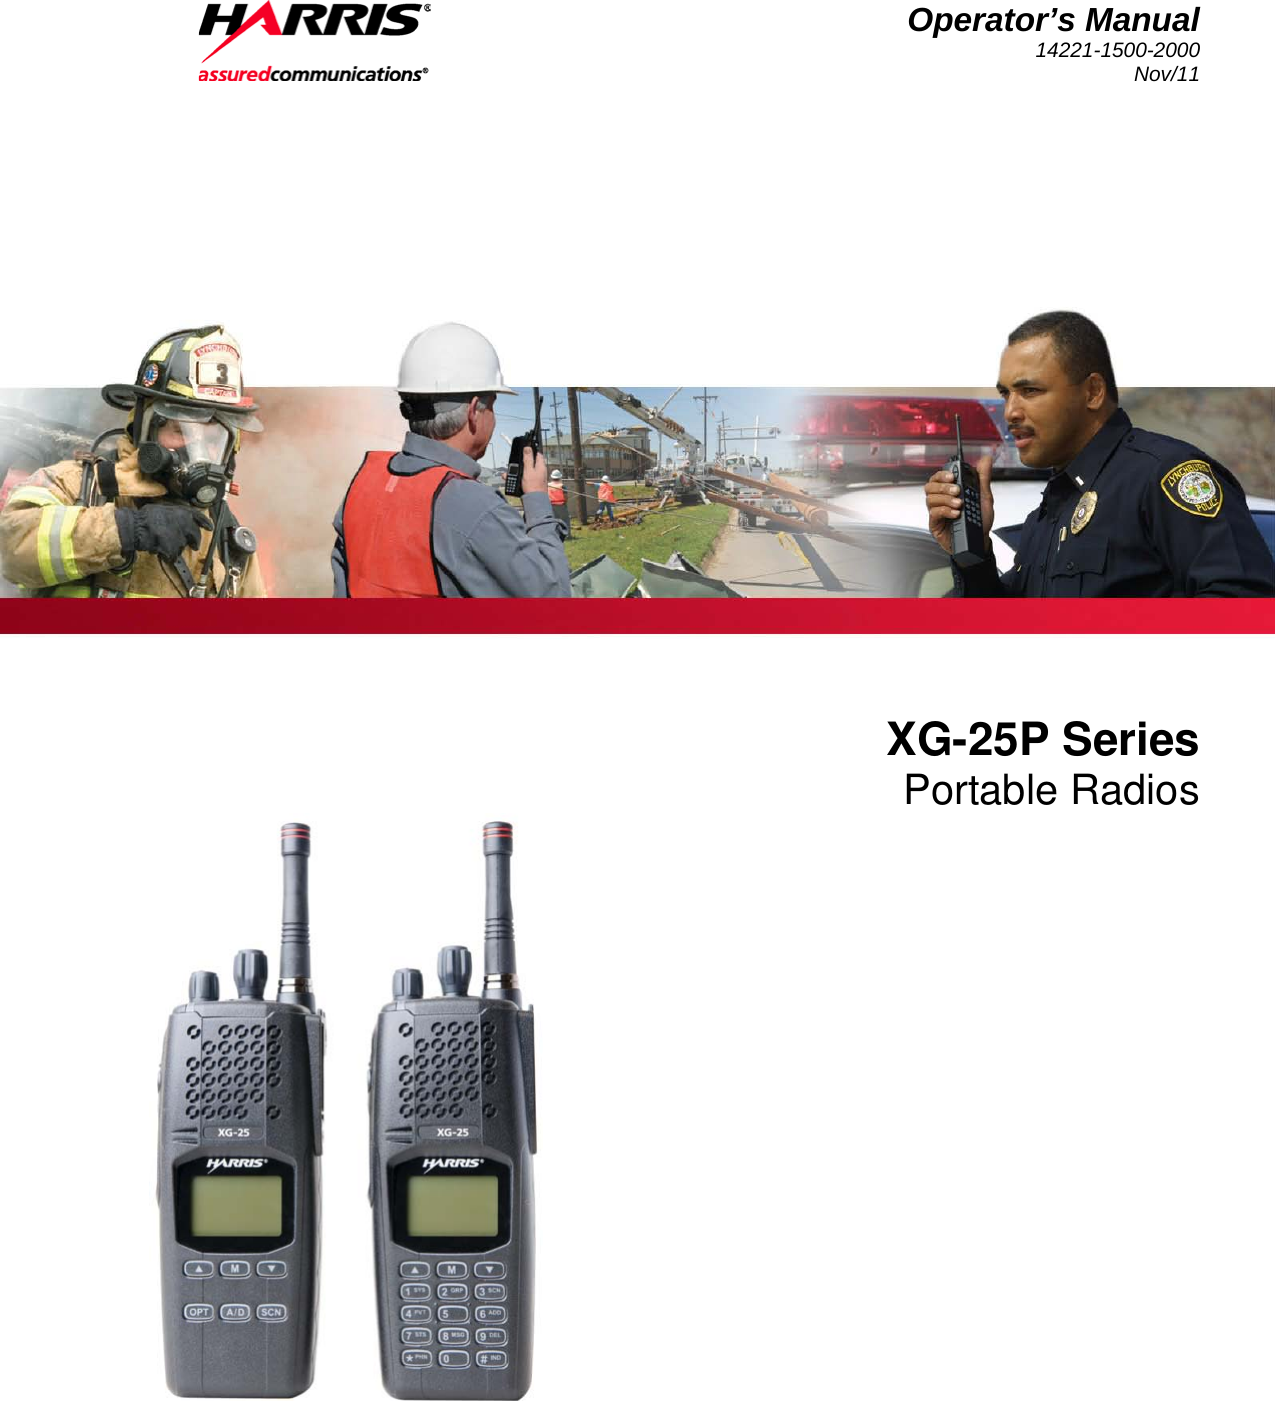  Operator’s Manual 14221-1500-2000 Nov/11    XG-25P Series Portable Radios  